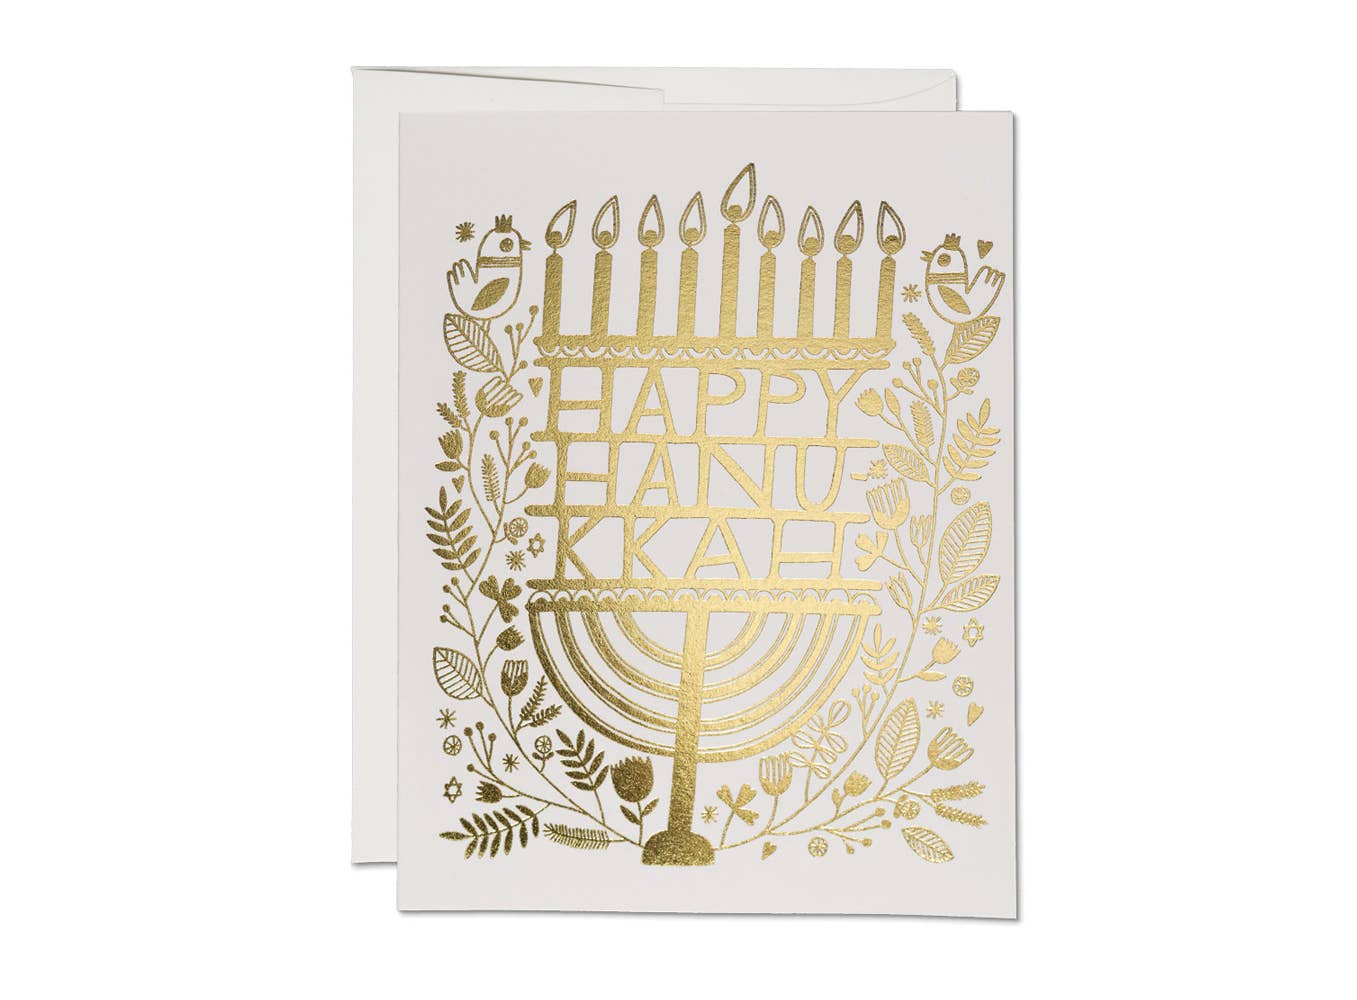 Hanukkah Candles | Hanukkah Greeting Card - Spiral Circle